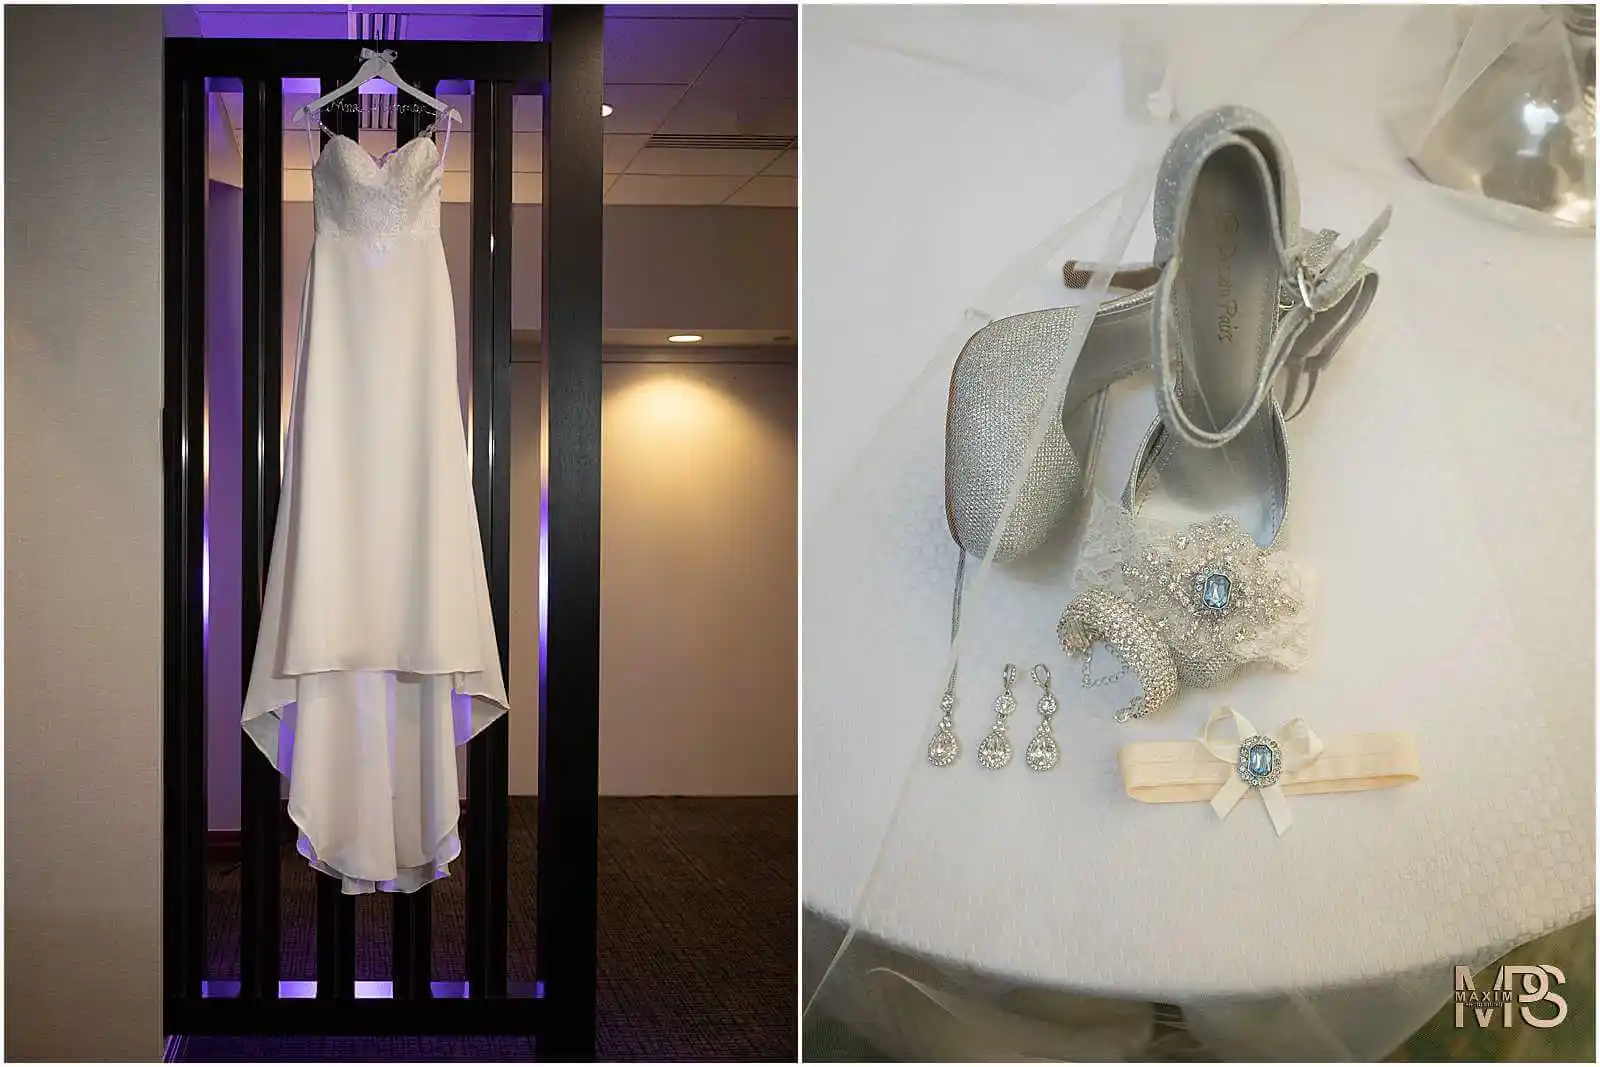 Elegant wedding dress on hanger with bridal accessories.